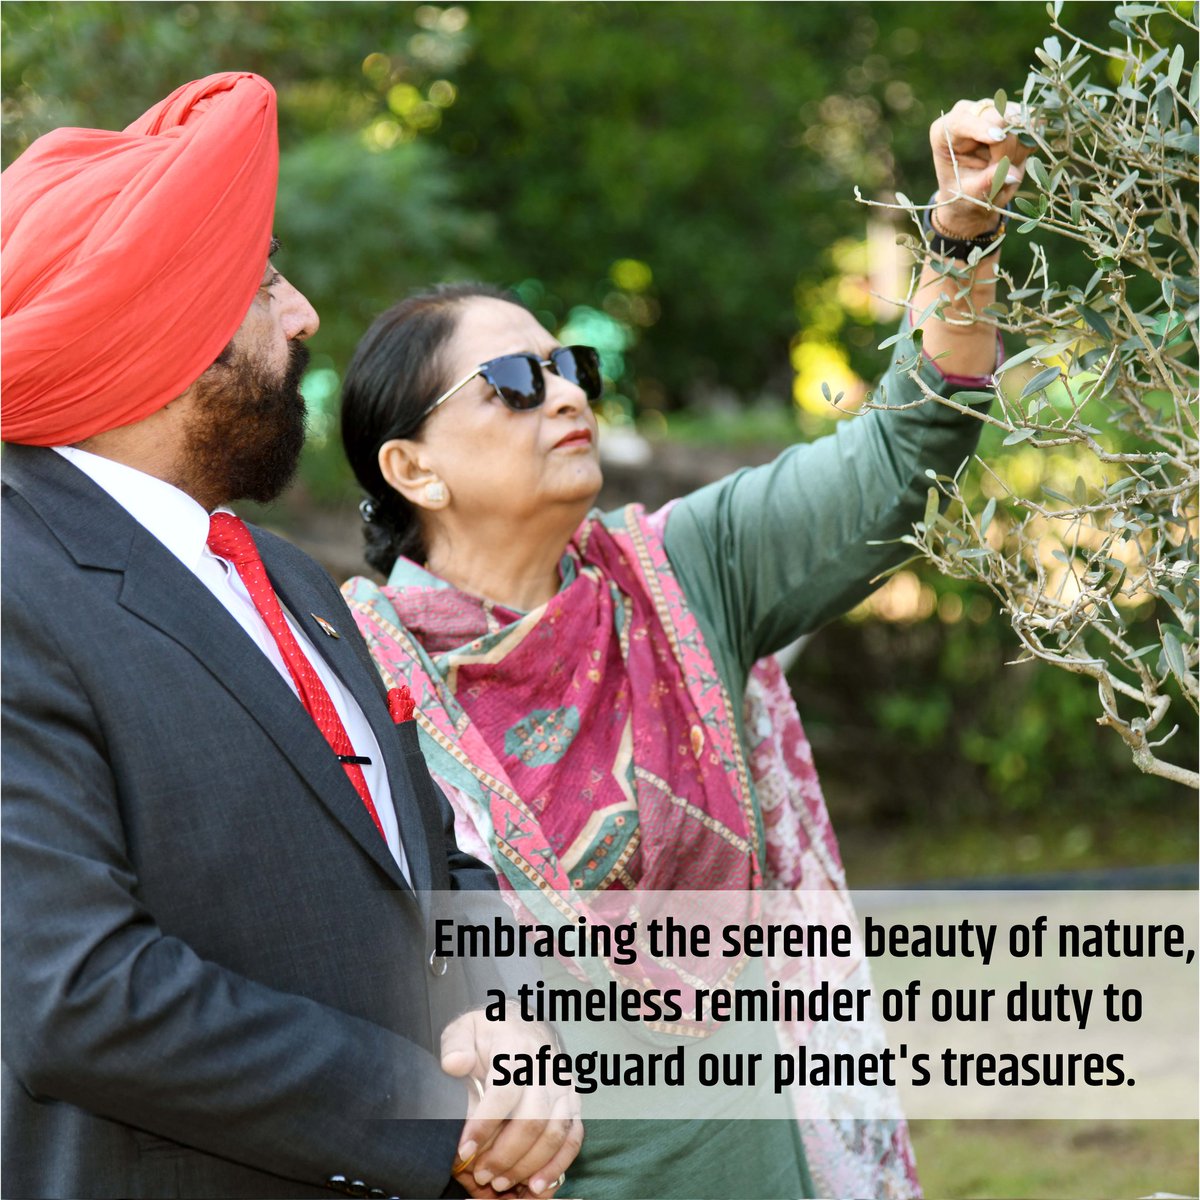 'Embracing the serene beauty of nature, a timeless reminder of our duty to safeguard our planet's treasures.' #NatureHeals #NatureTherapy #NatureLove #NatureBeauty #NaturePhotography #Uttarakhand #Bharat #EarthMonth @rashtrapatibhvn @VPIndia @PMOIndia @narendramodi @adgpi